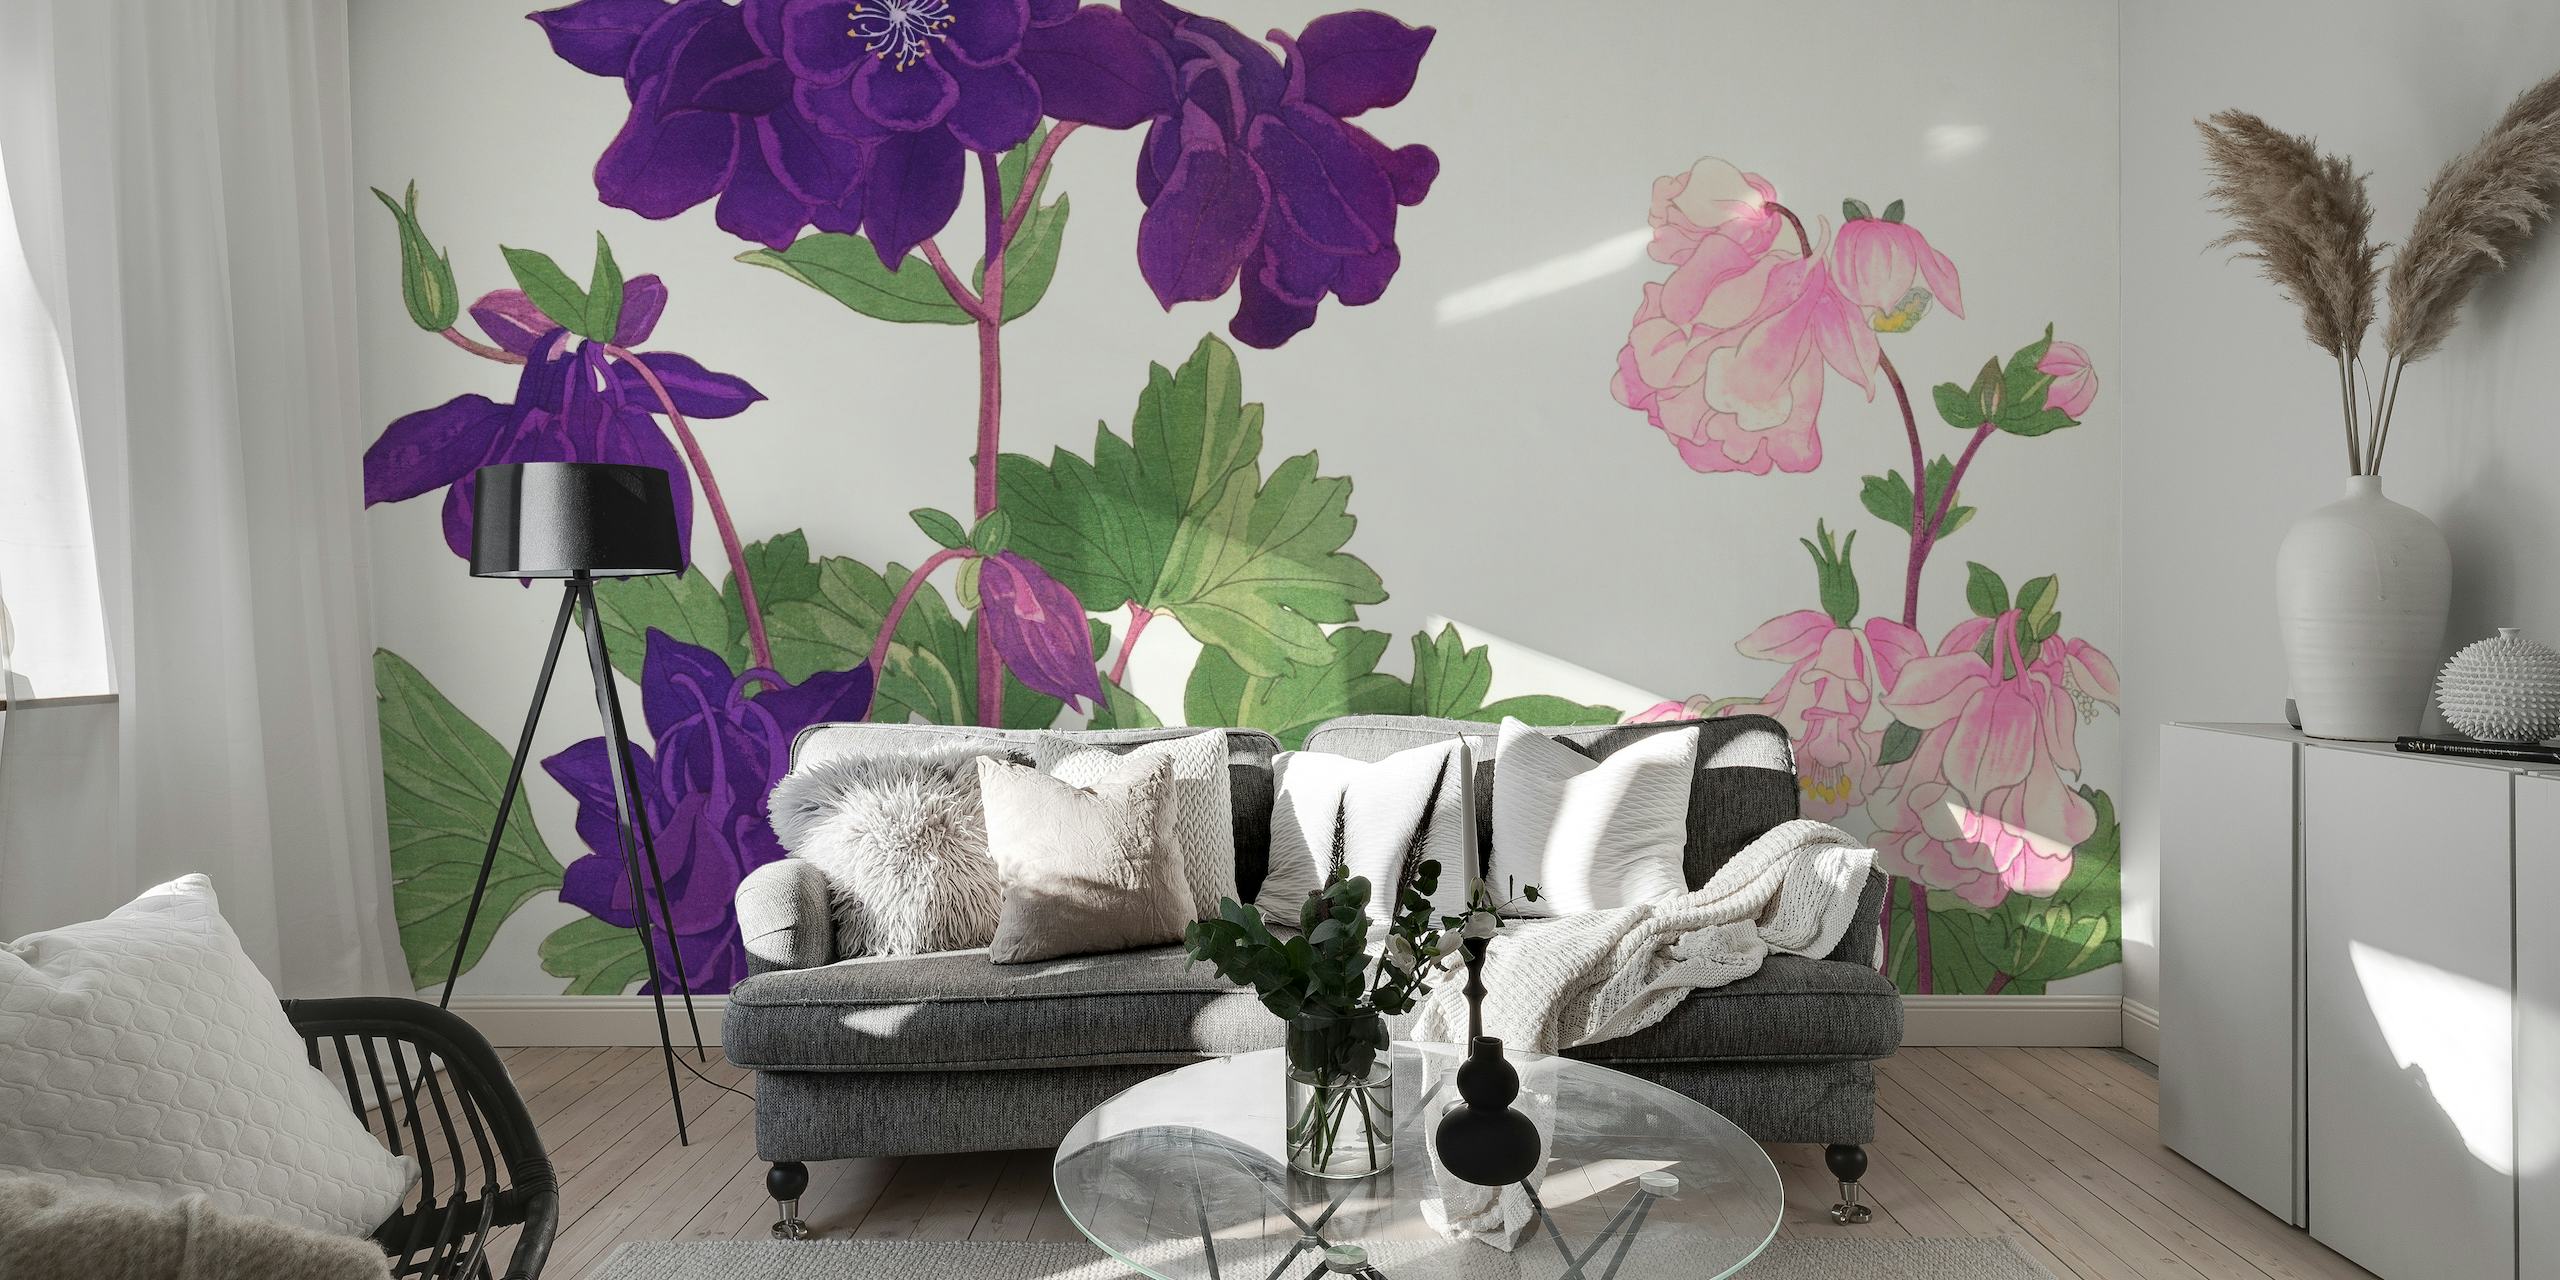 Skandinavisk-inspireret Scandi Gardens vægmaleri med lilla og lyserøde blomster